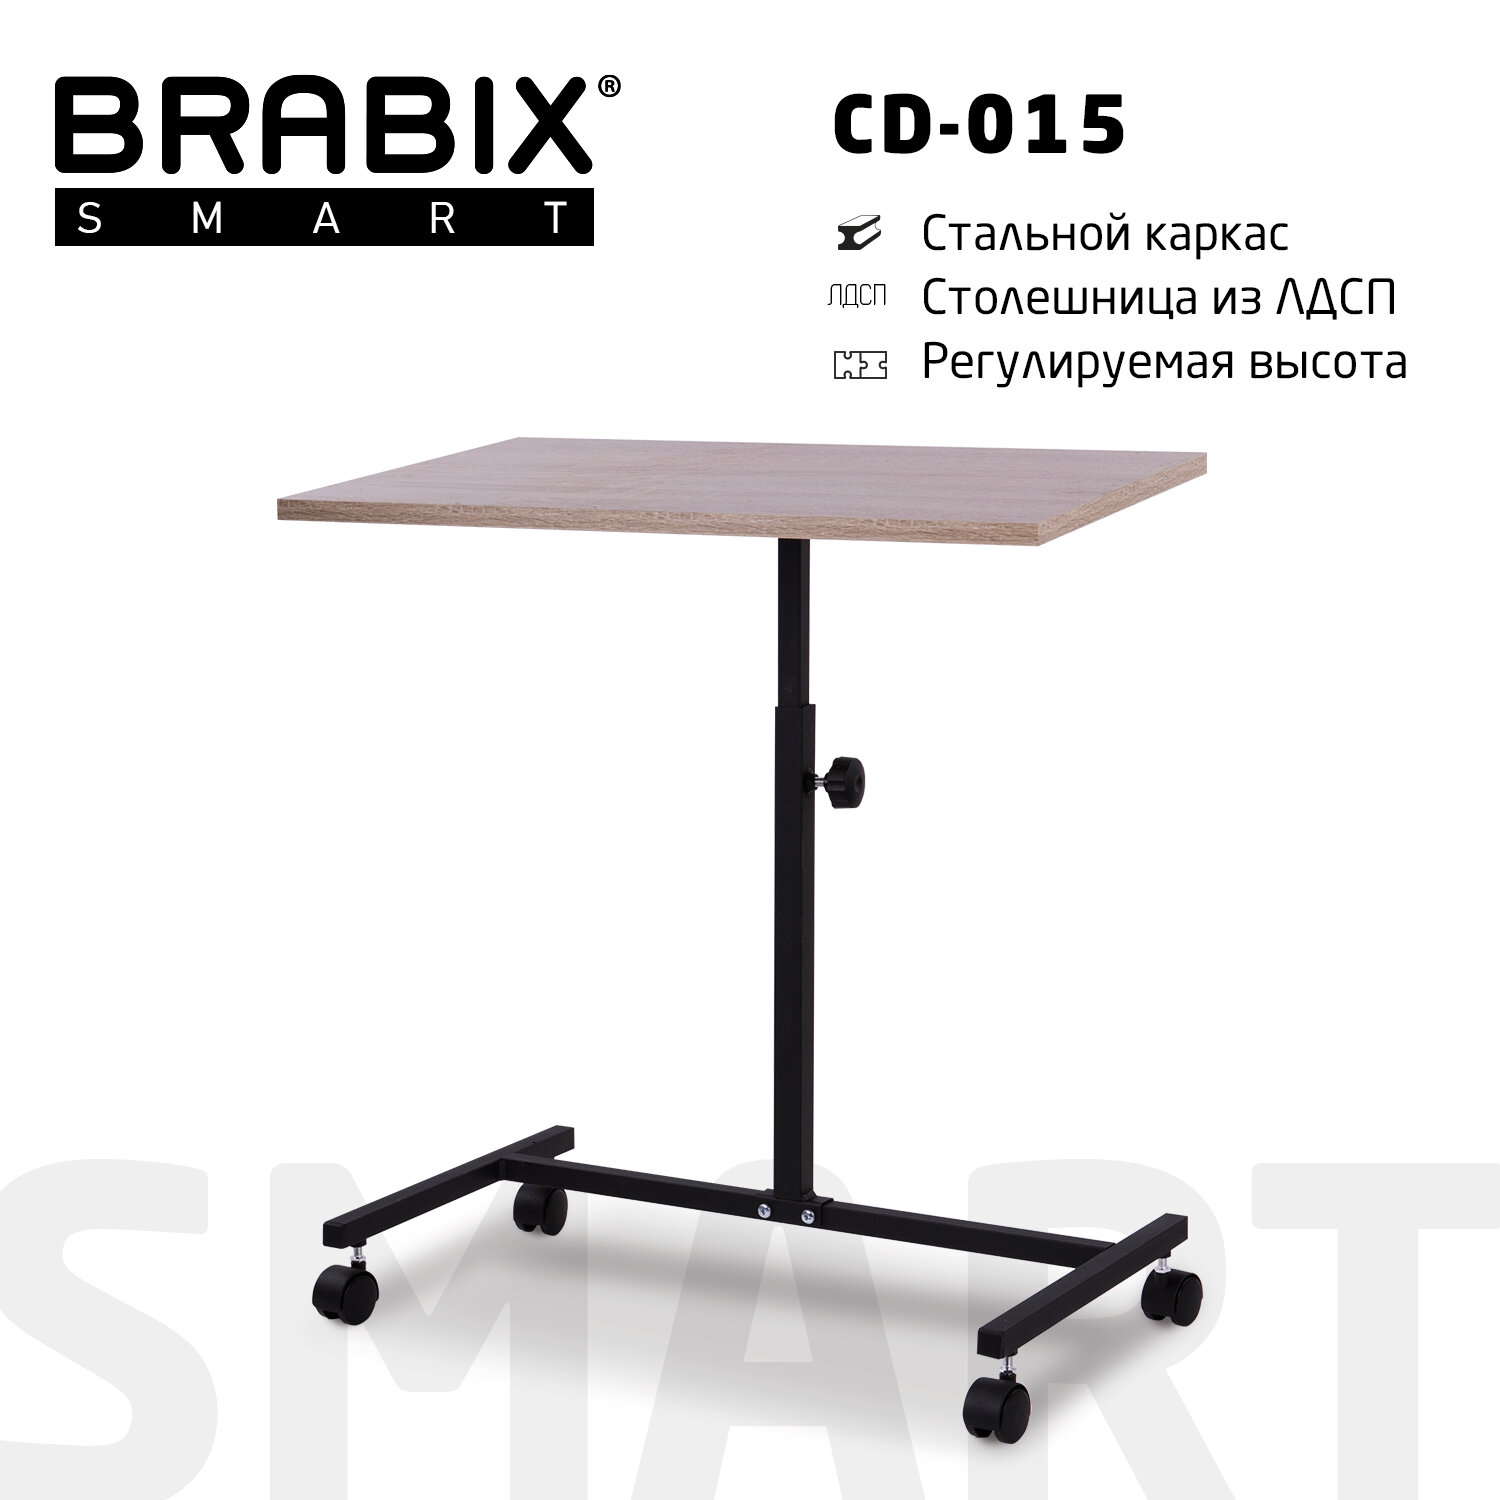  BRABIX Smart CD-015 641886